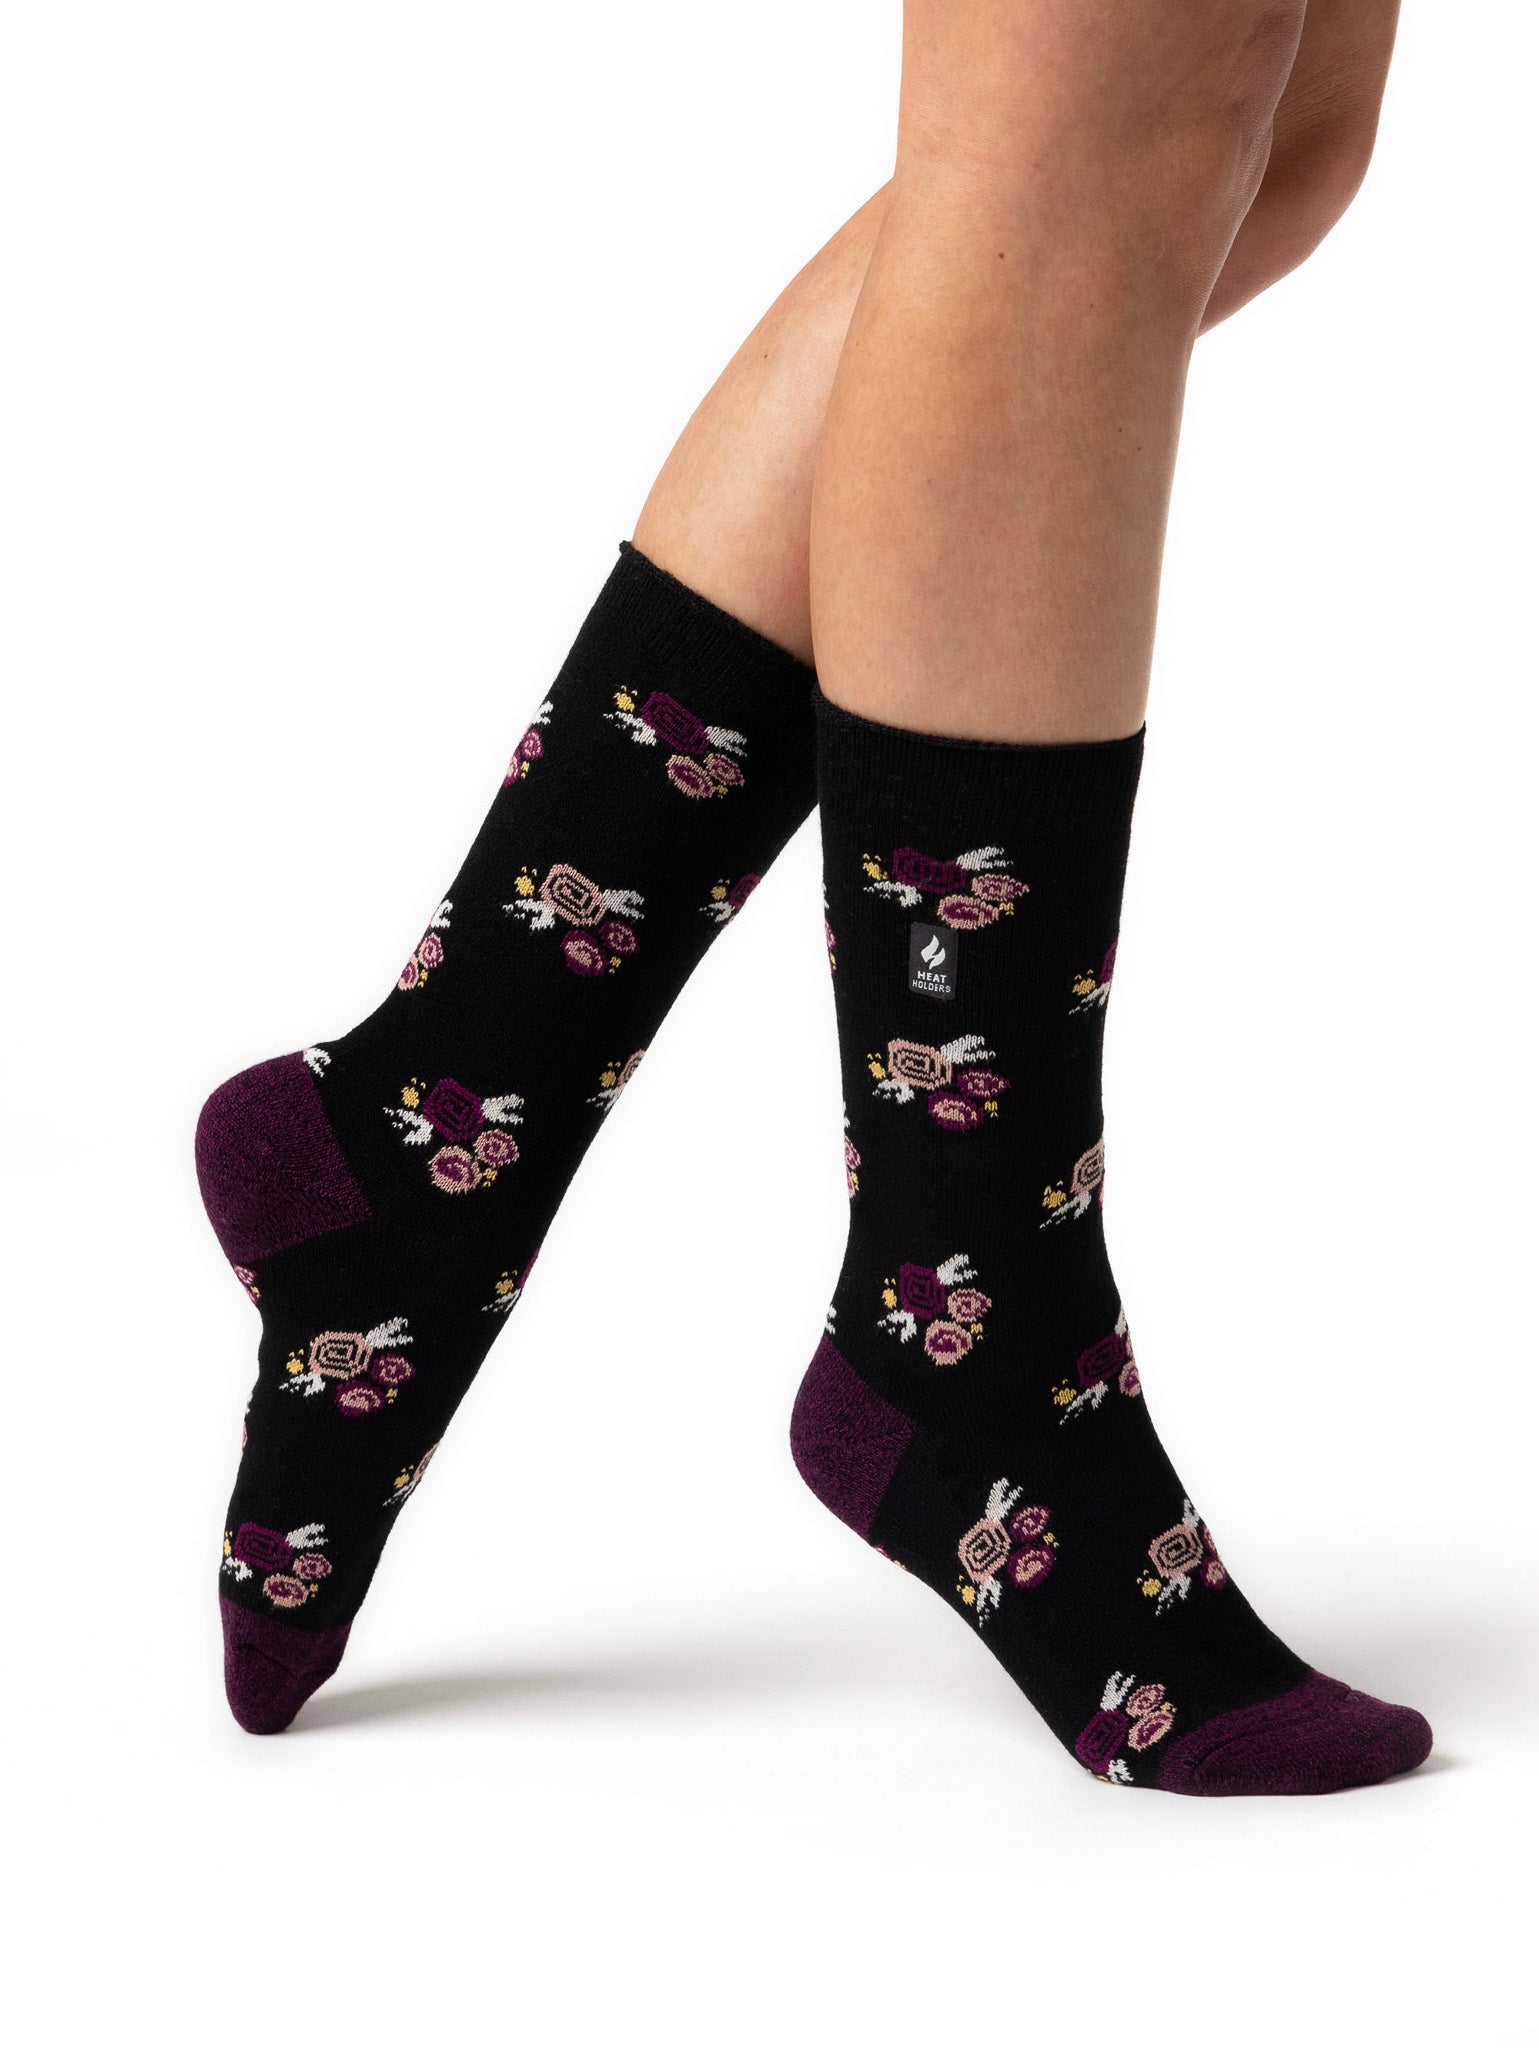 HEAT HOLDERS Ultimate Ultra Lite Thermal Socks - Womens